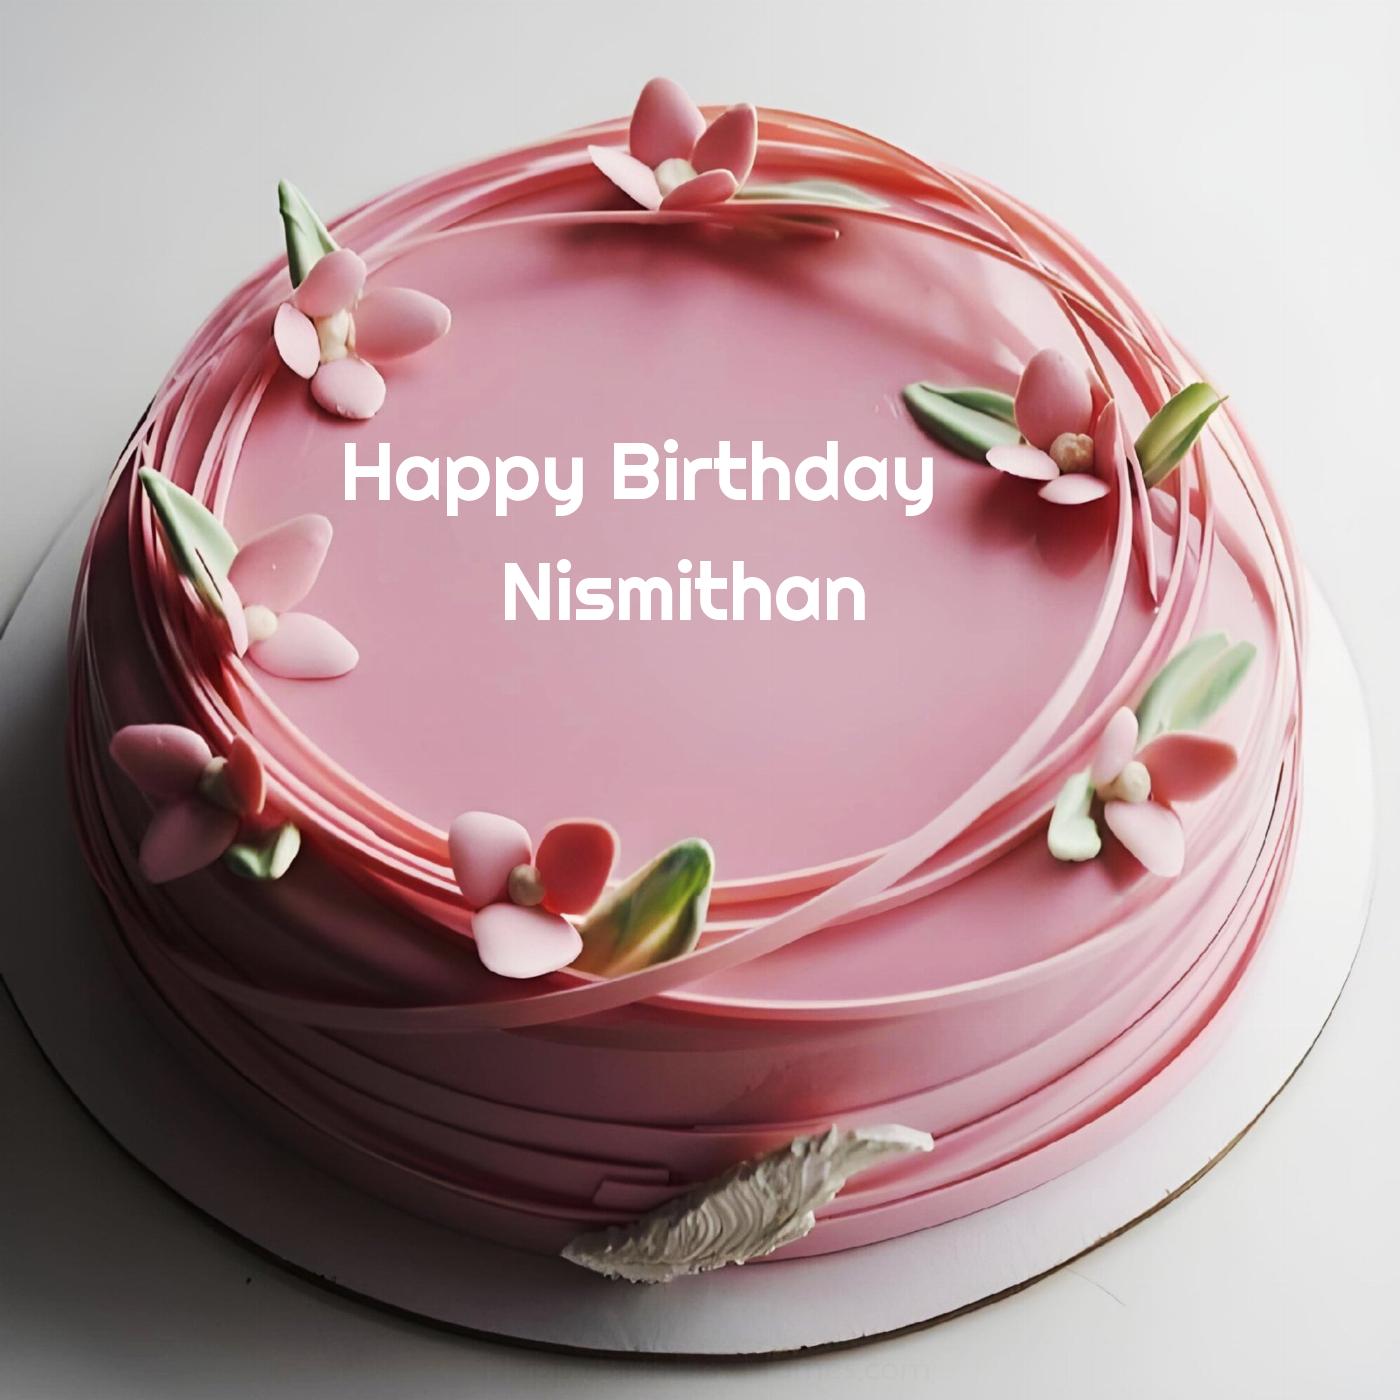 Happy Birthday Nismithan Pink Flowers Cake